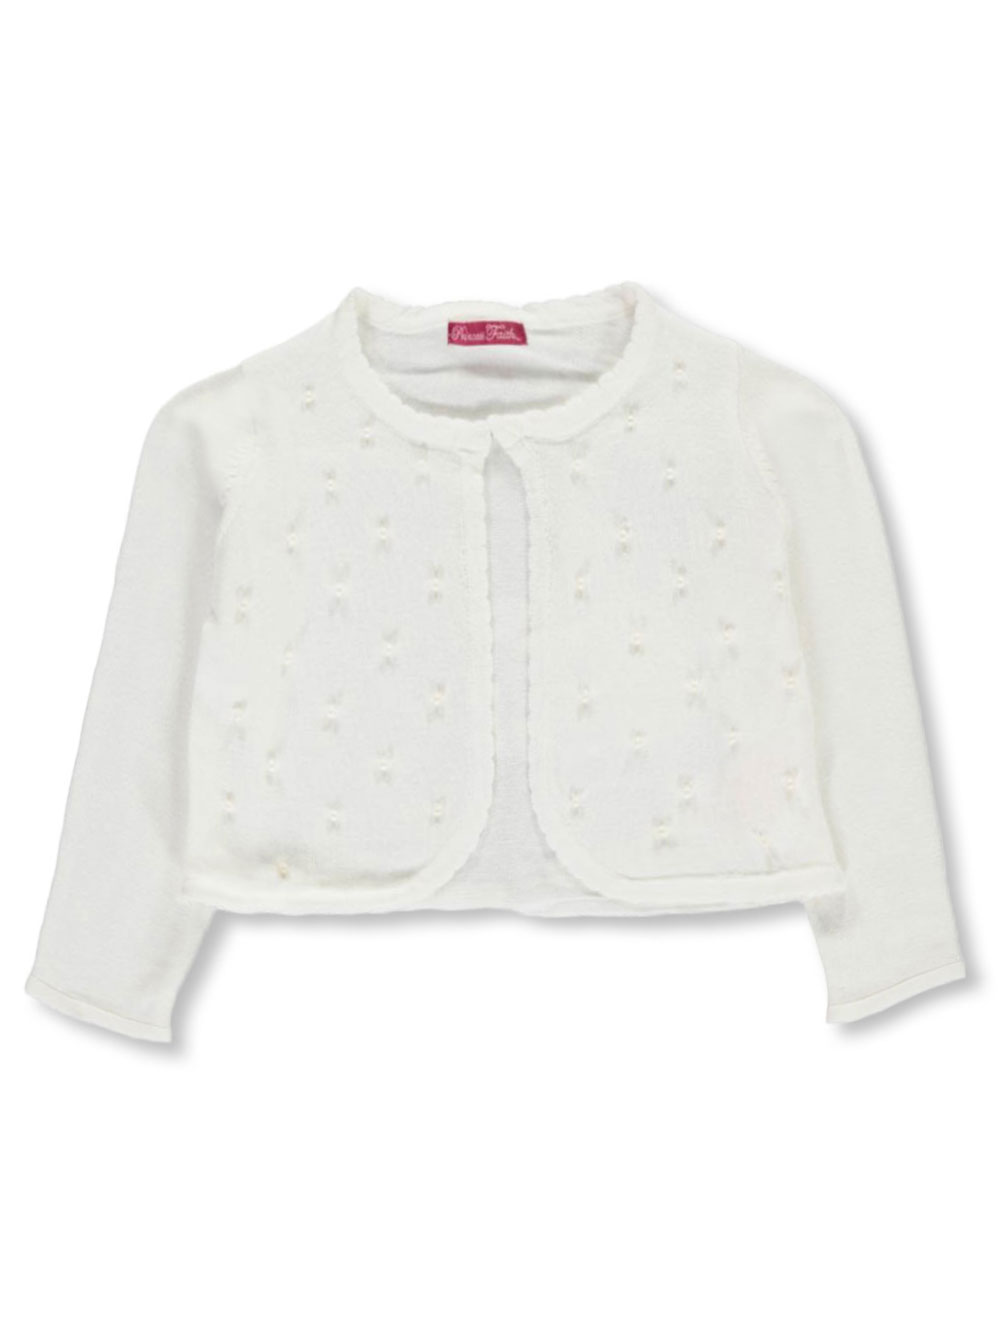 Little Girl 2T-6X White Flower Embroidered Scallop Bolero Cardigan Shrug//Sweater